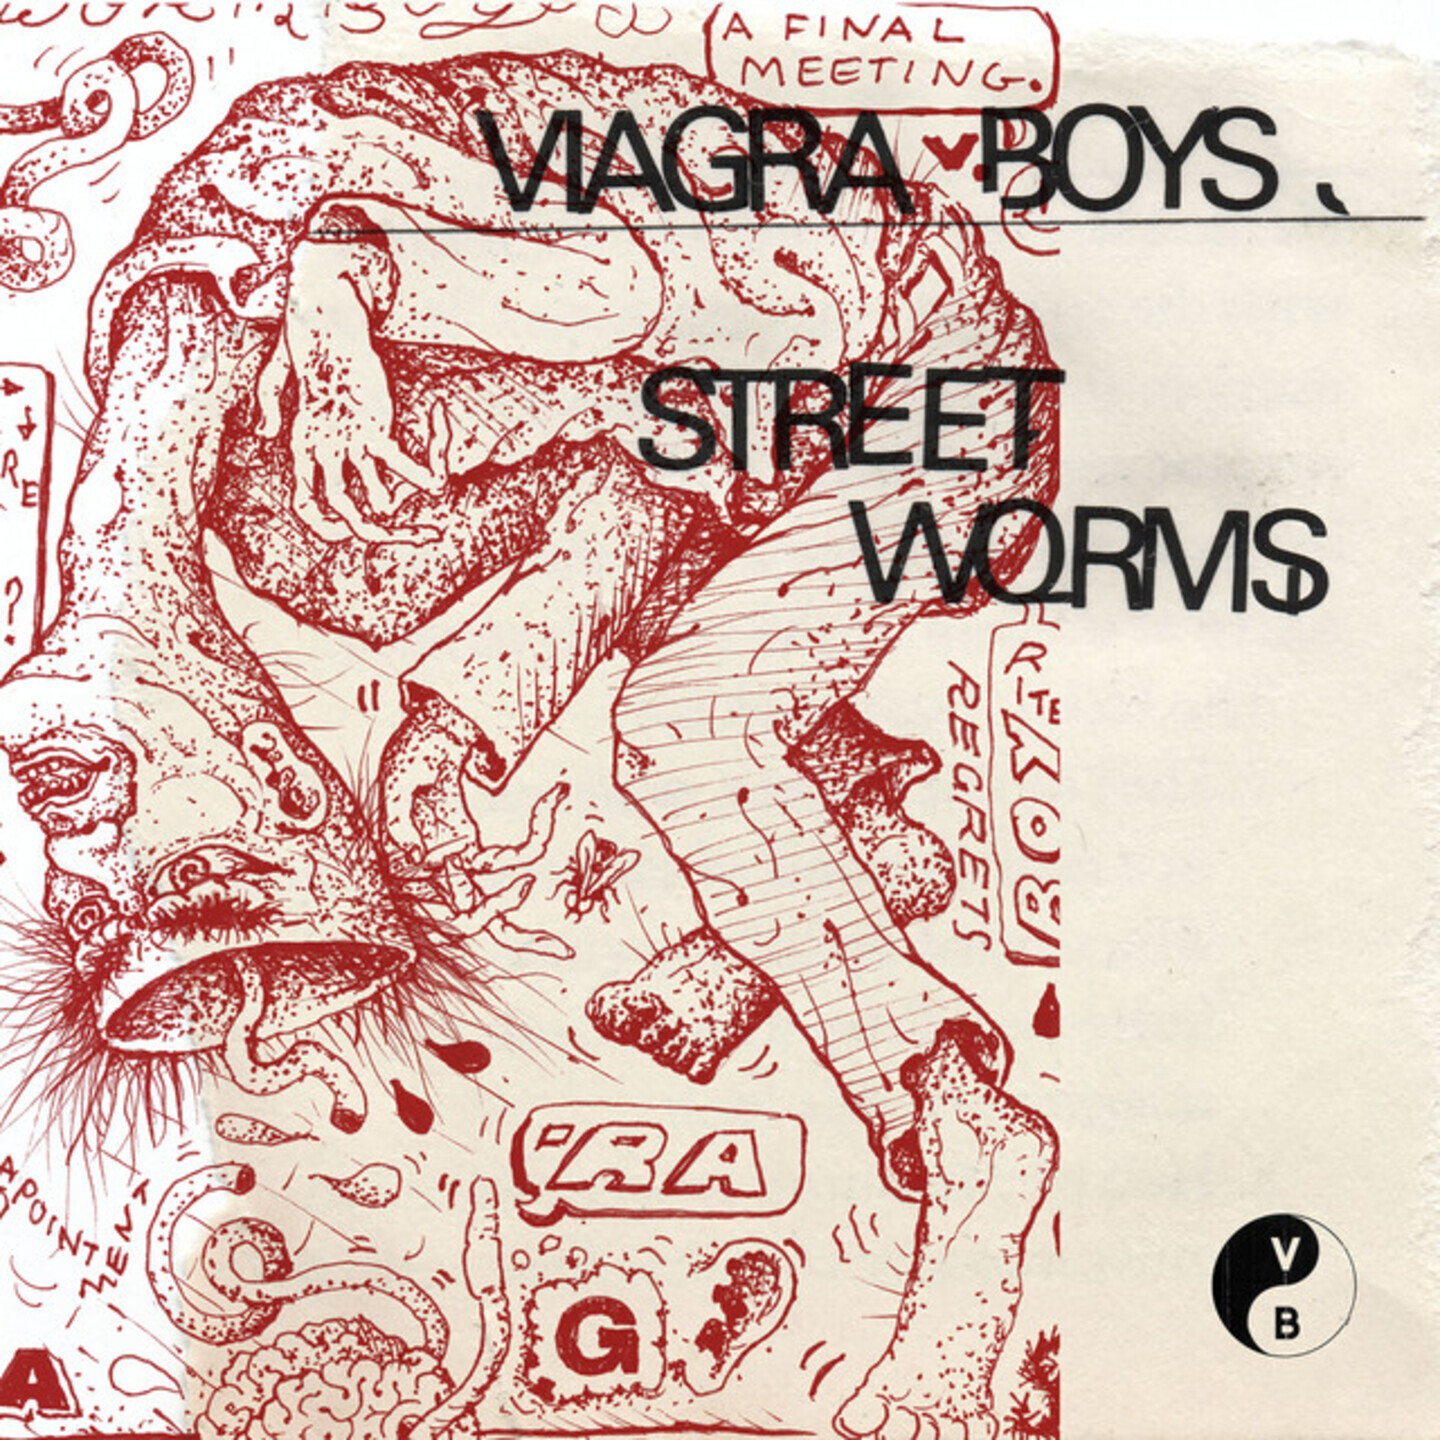 VIAGRA BOYS - Street Worms LP (Clear Vinyl)